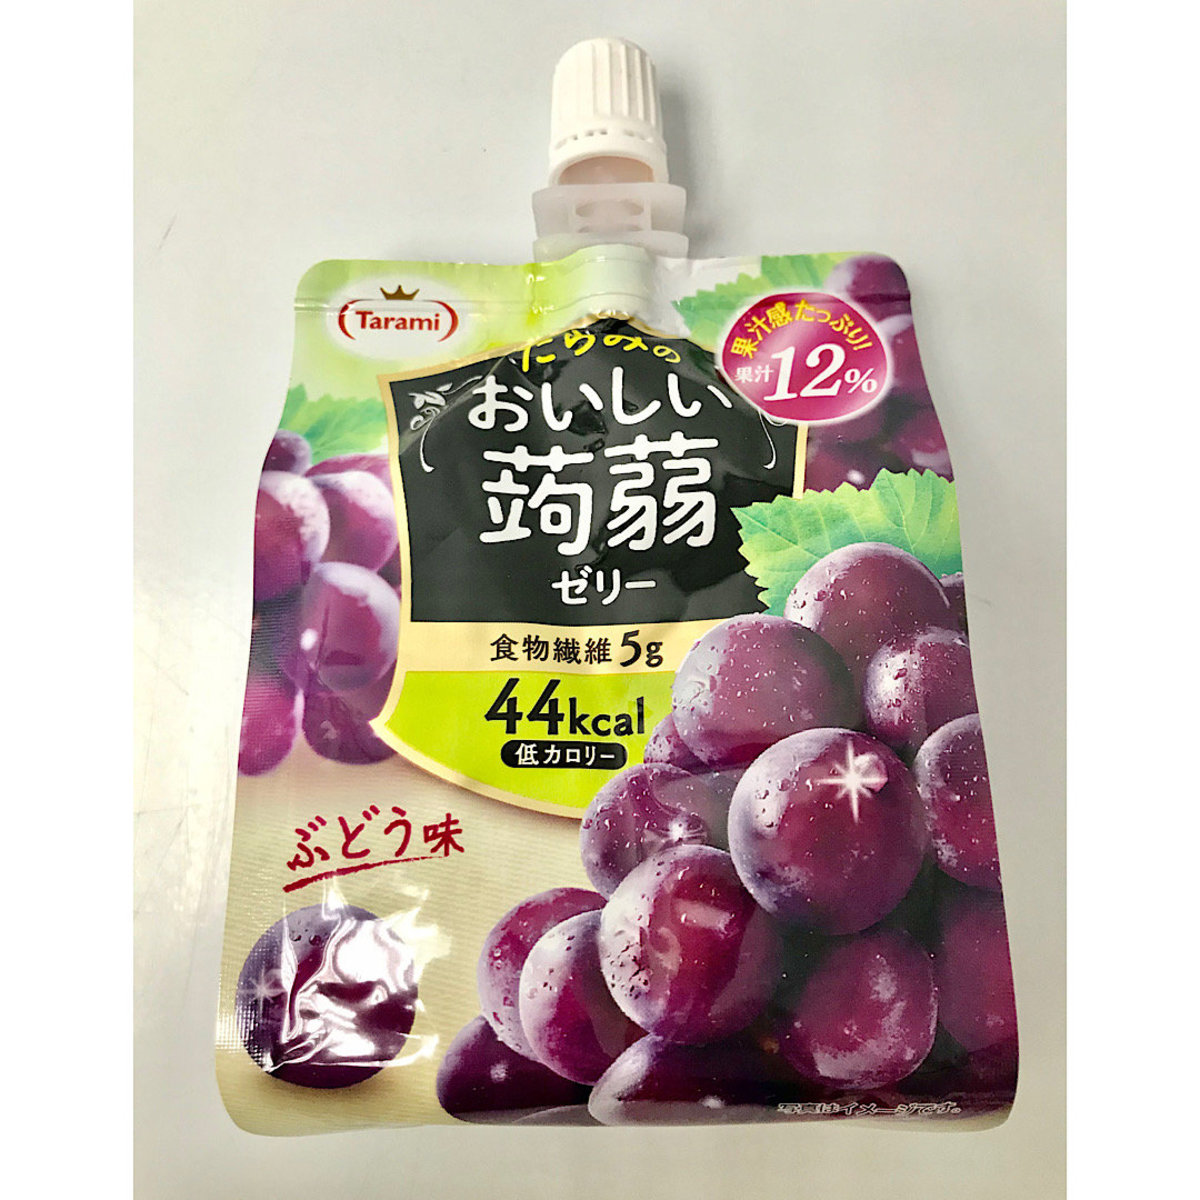 Potato Store Low Calorie Konjac Jelly Drink Grape Flavor 150g X 3 Packs Hktvmall Online Shopping